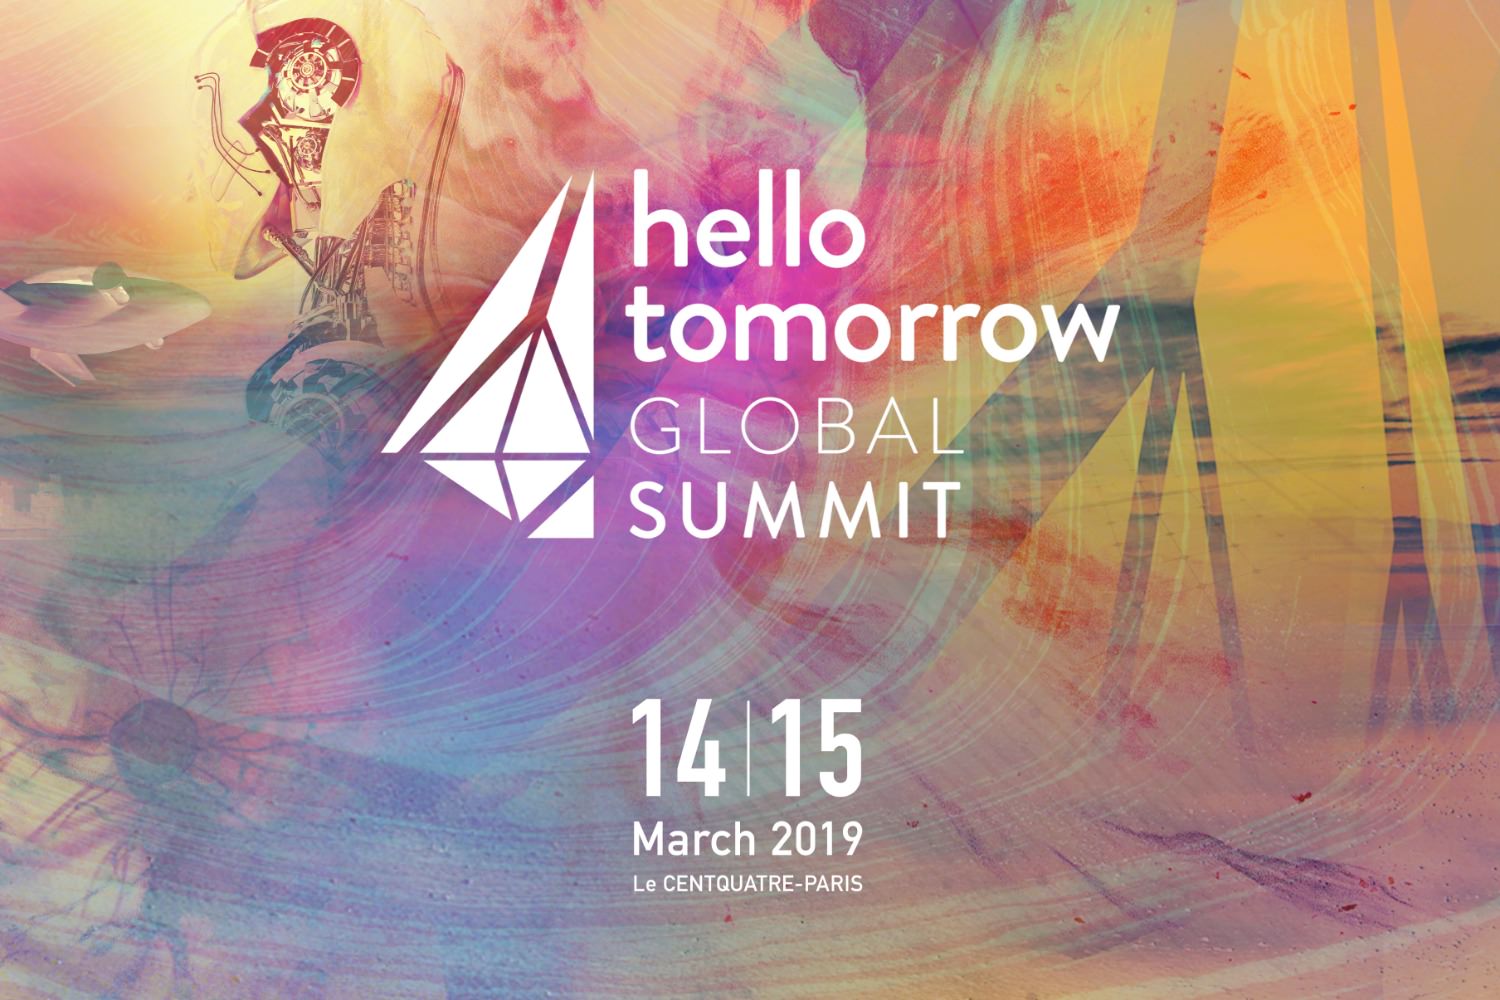 Hello Tomorrow Global Summit 2019 